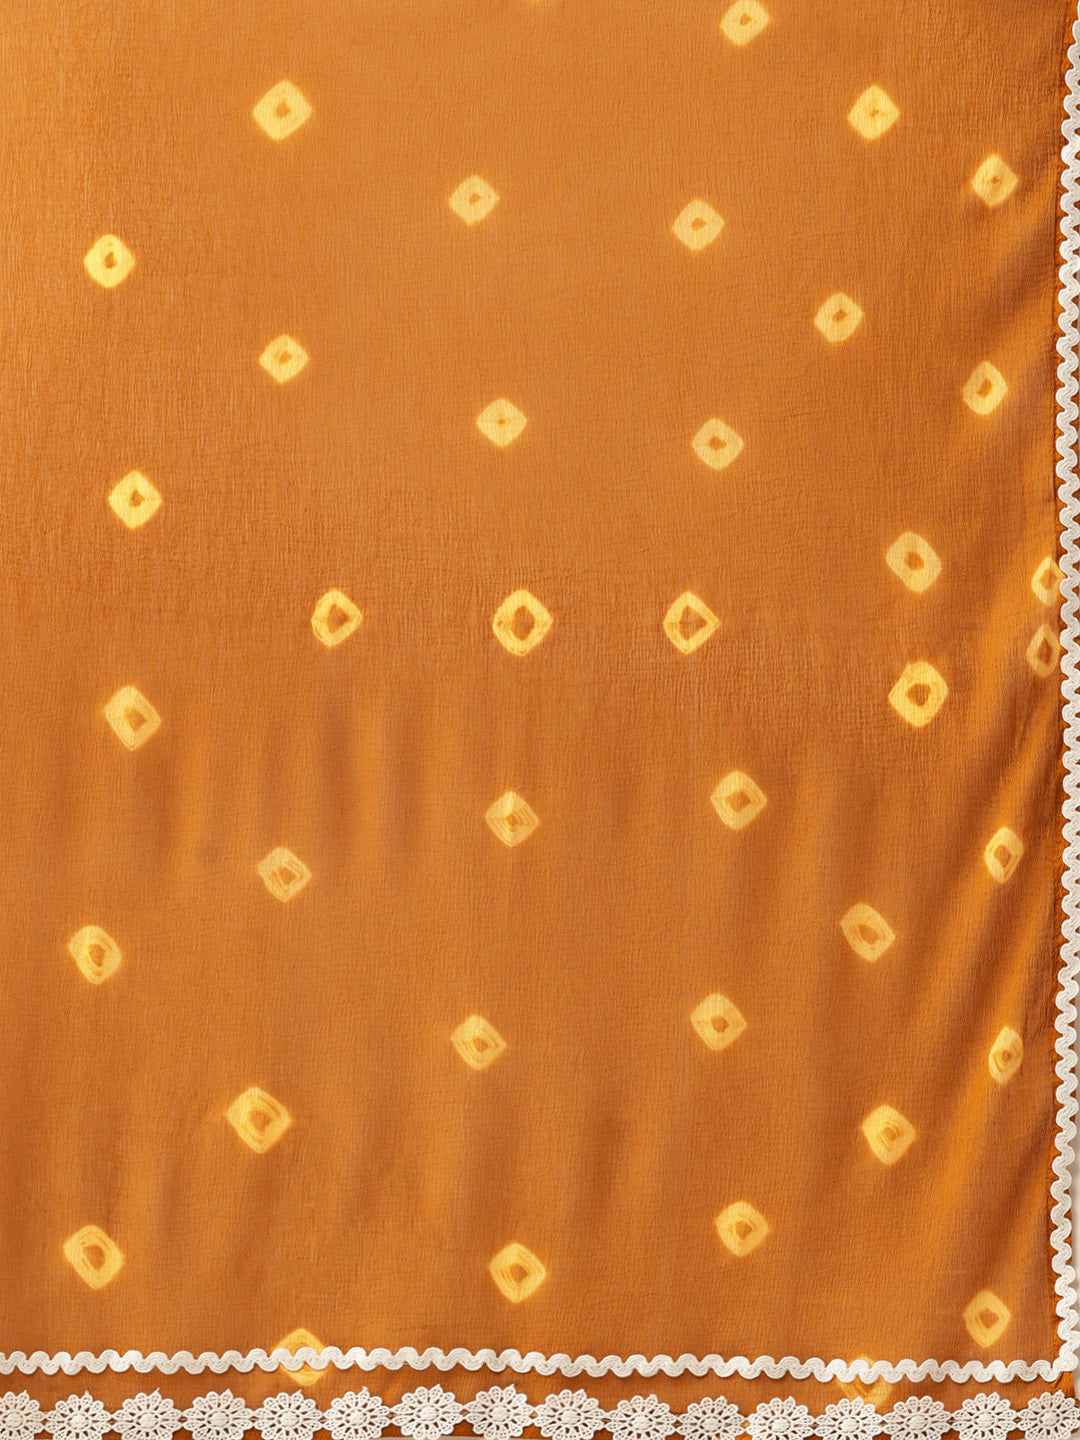 Women's Yellow Color Rayon Blend Printed Kurta Pant With Dupatta - VAABA